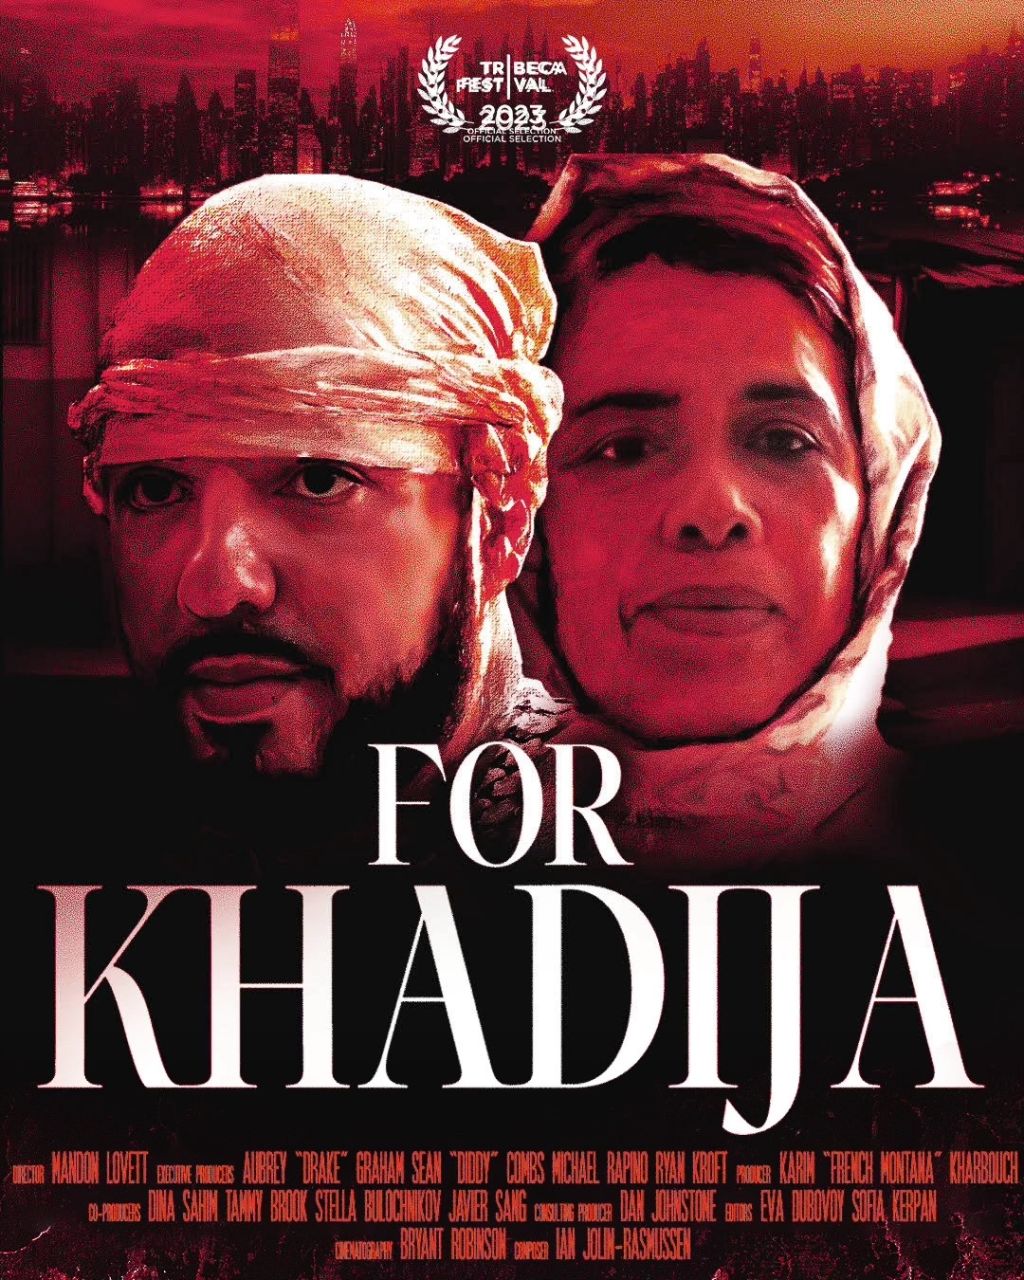 For Khadija poster - French Montana's documentary